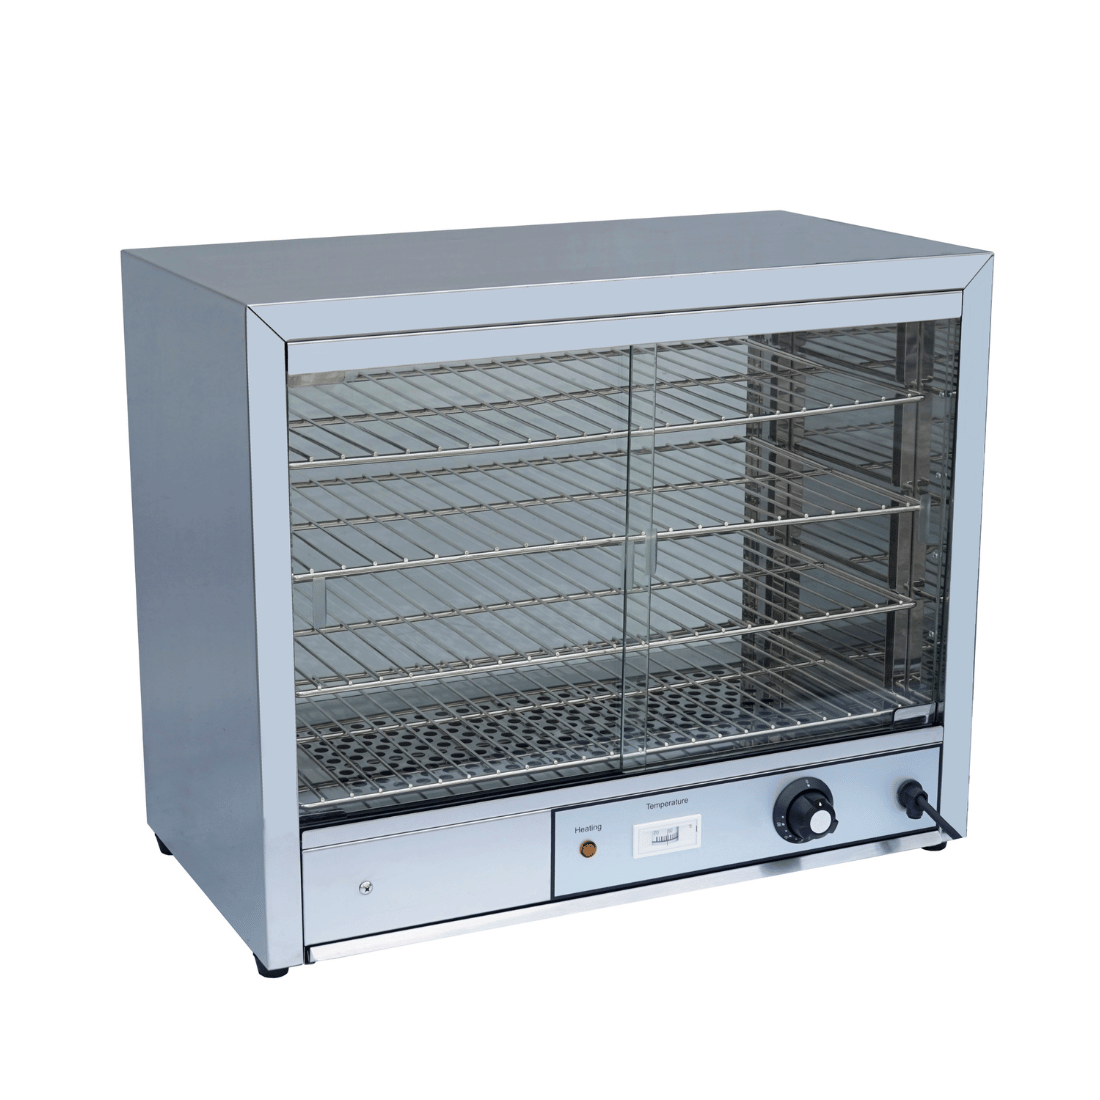 Pie Warmer & Hot Food Display - DH-805E